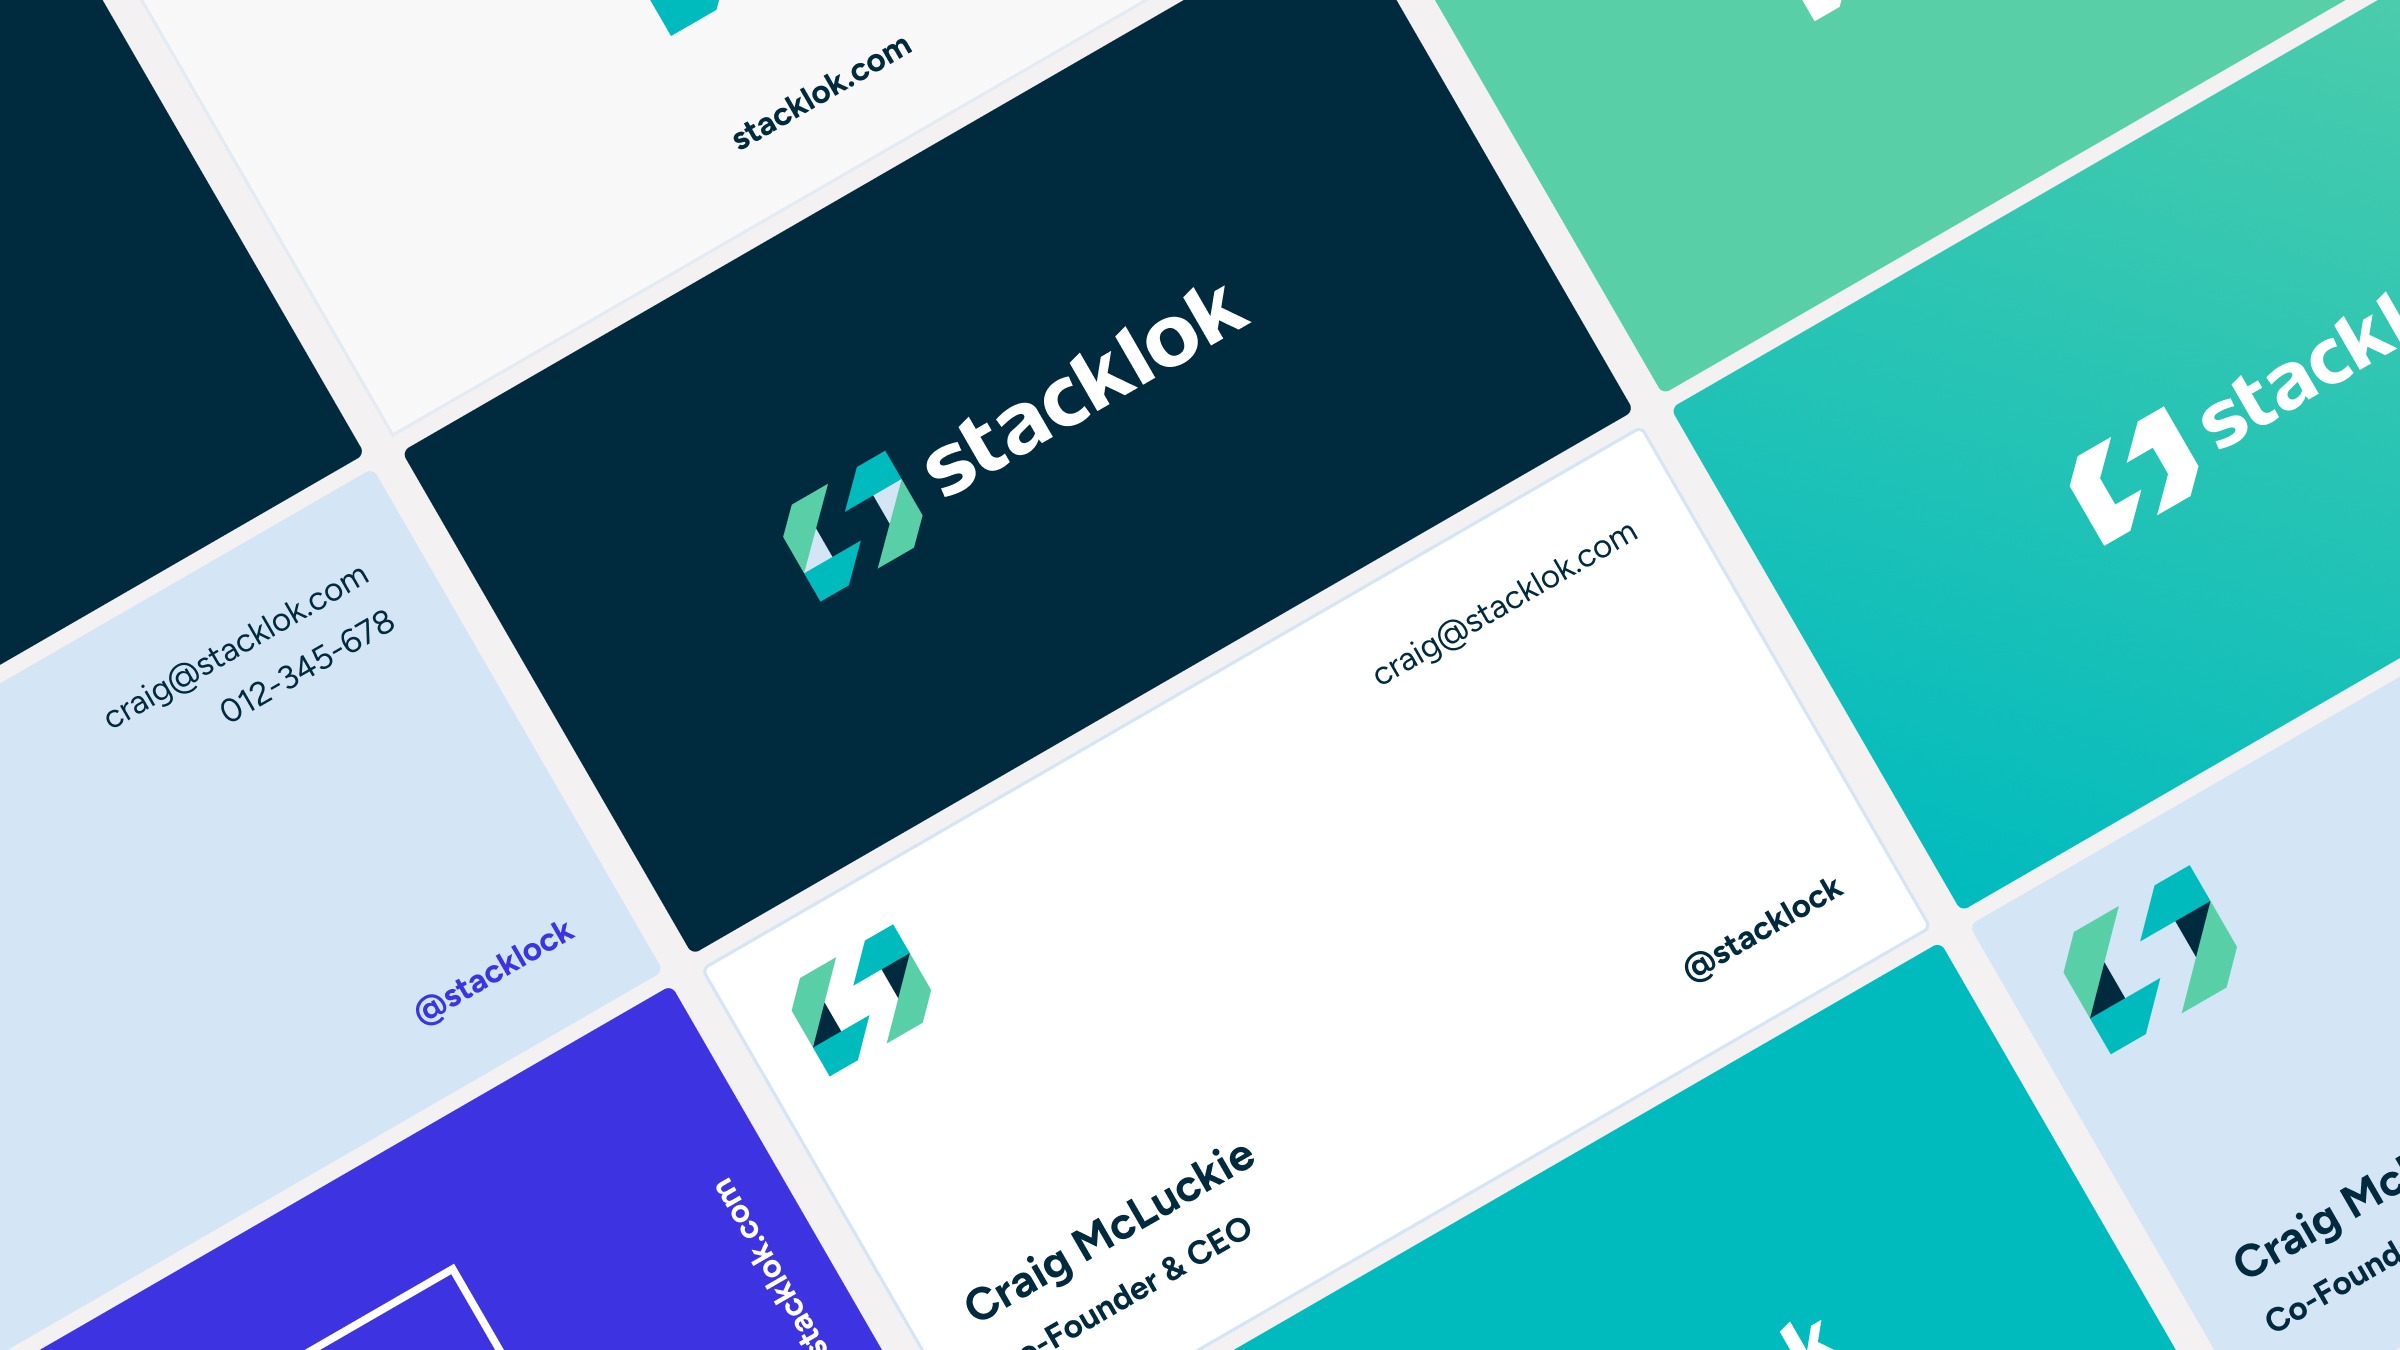 Stacklok brand design elements showcasing their new business card design